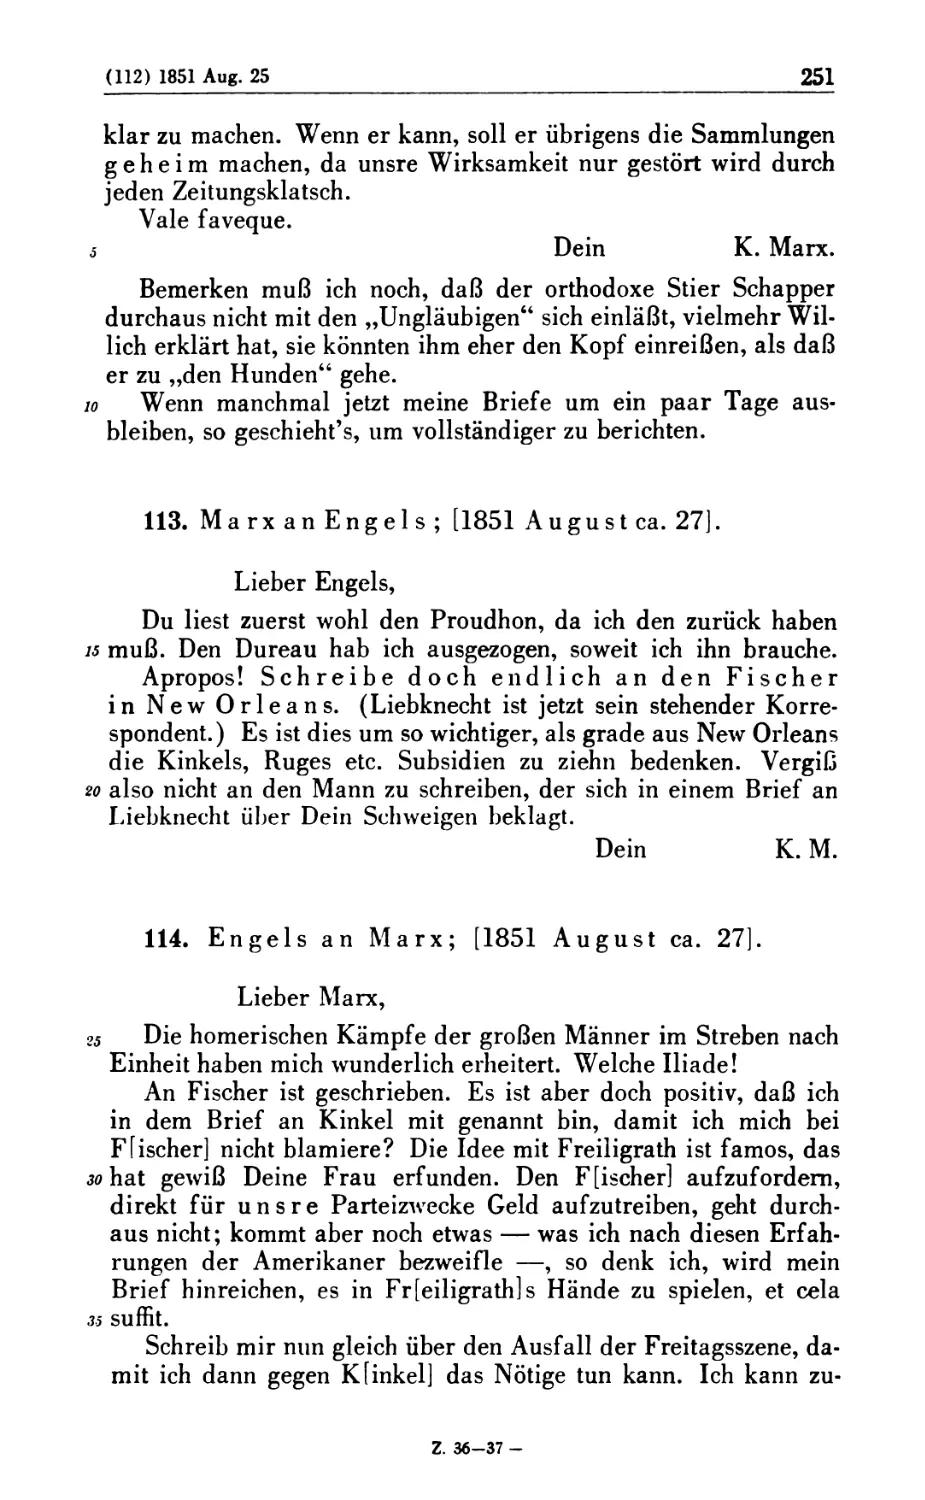 113. Marx an Engels; [1851 August ca. 27]
114. Engels an Marx; [1851 August ca. 27]